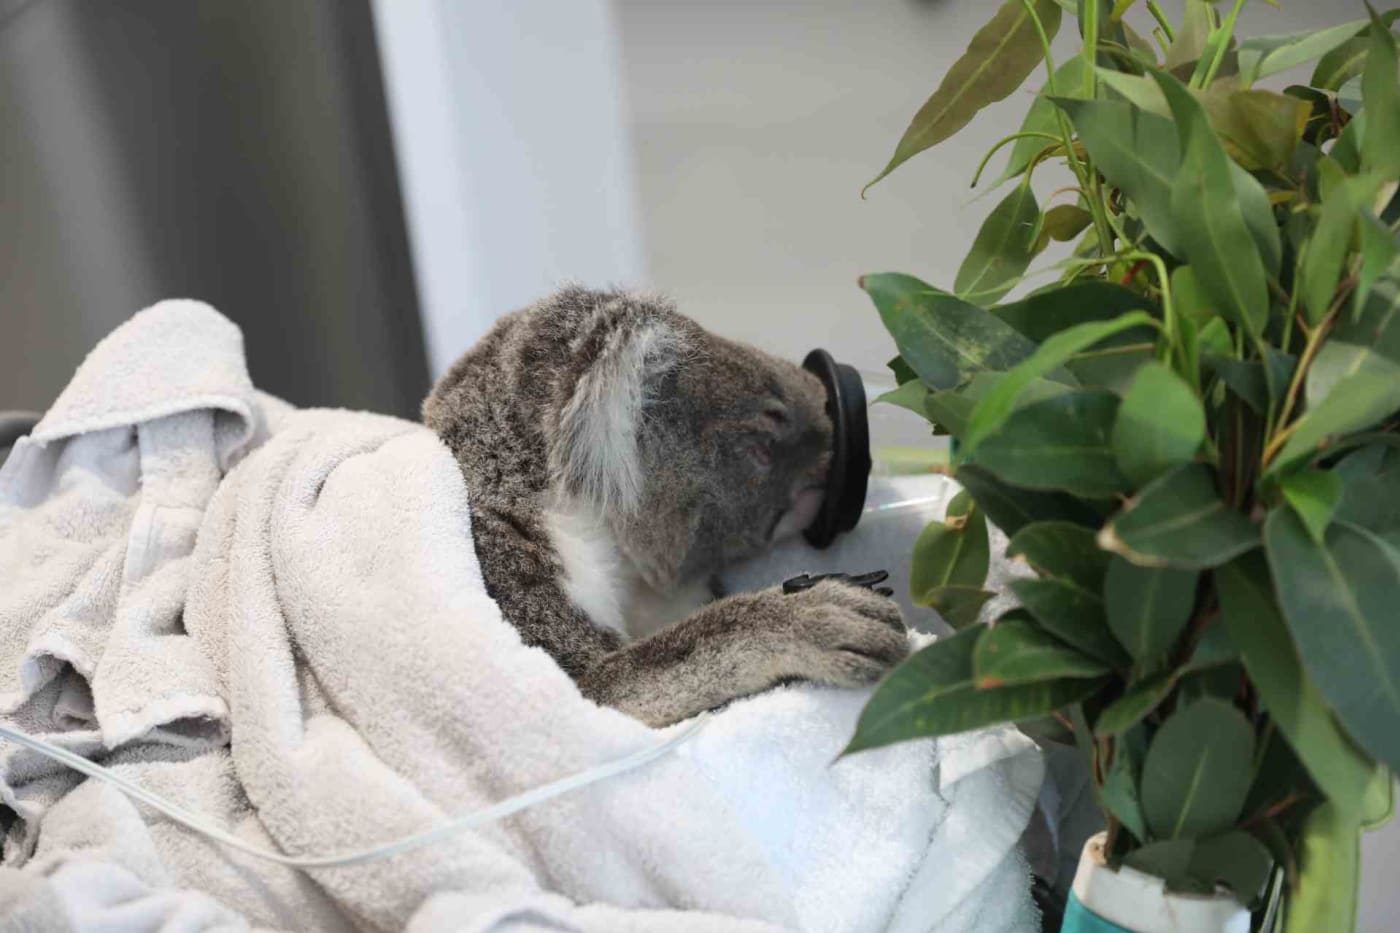 Kevin recovering from sedation at Port Stephens Koalas Wildlife Hospital